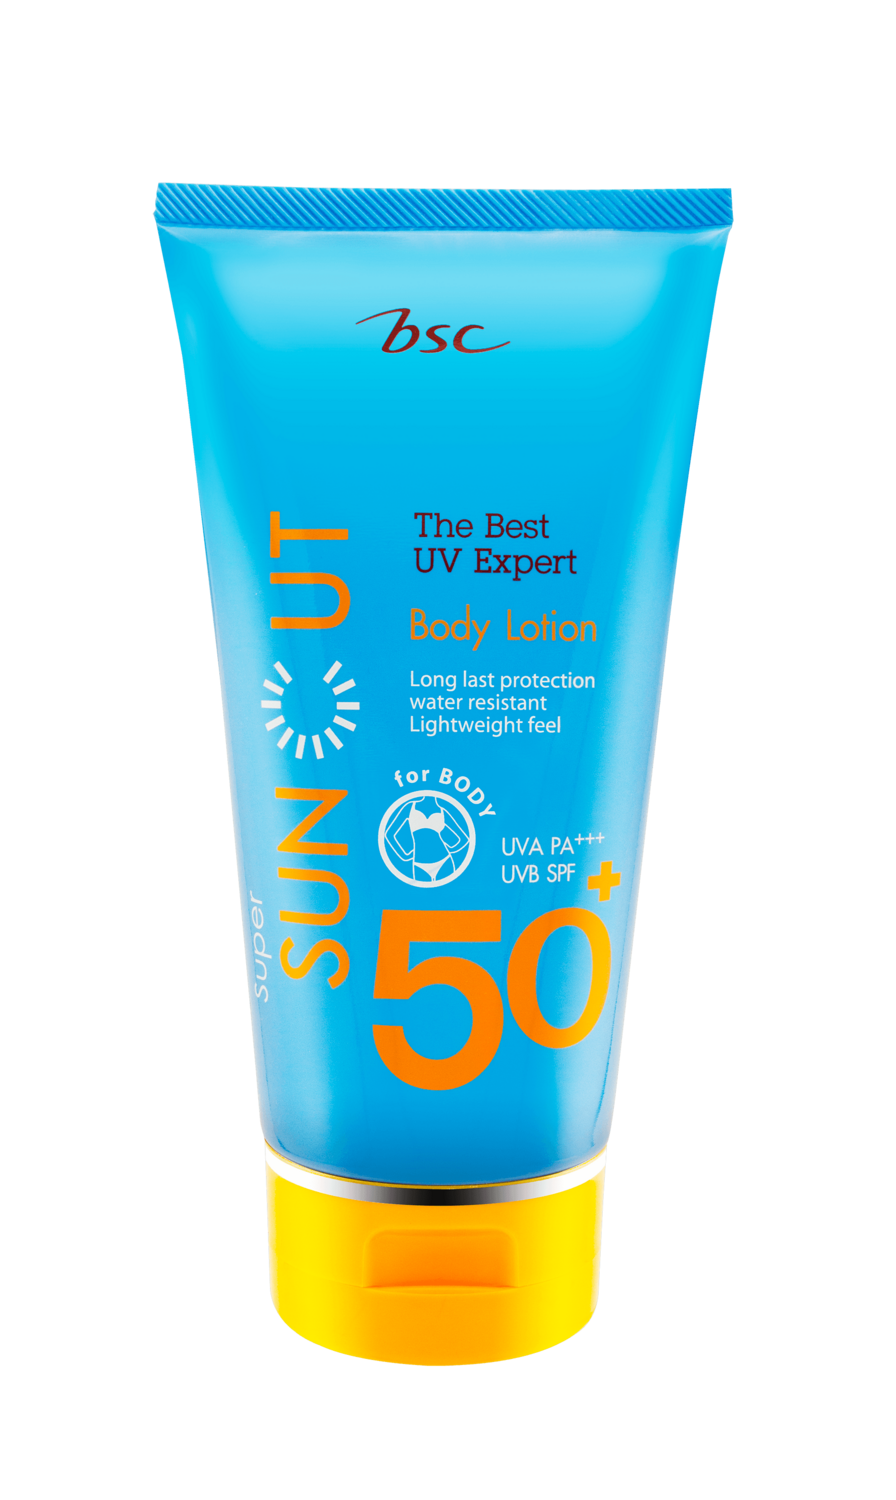 BSC SUPER SUN CUT THE BEST UV EXPERT BODY LOTION SPF50 PA+++